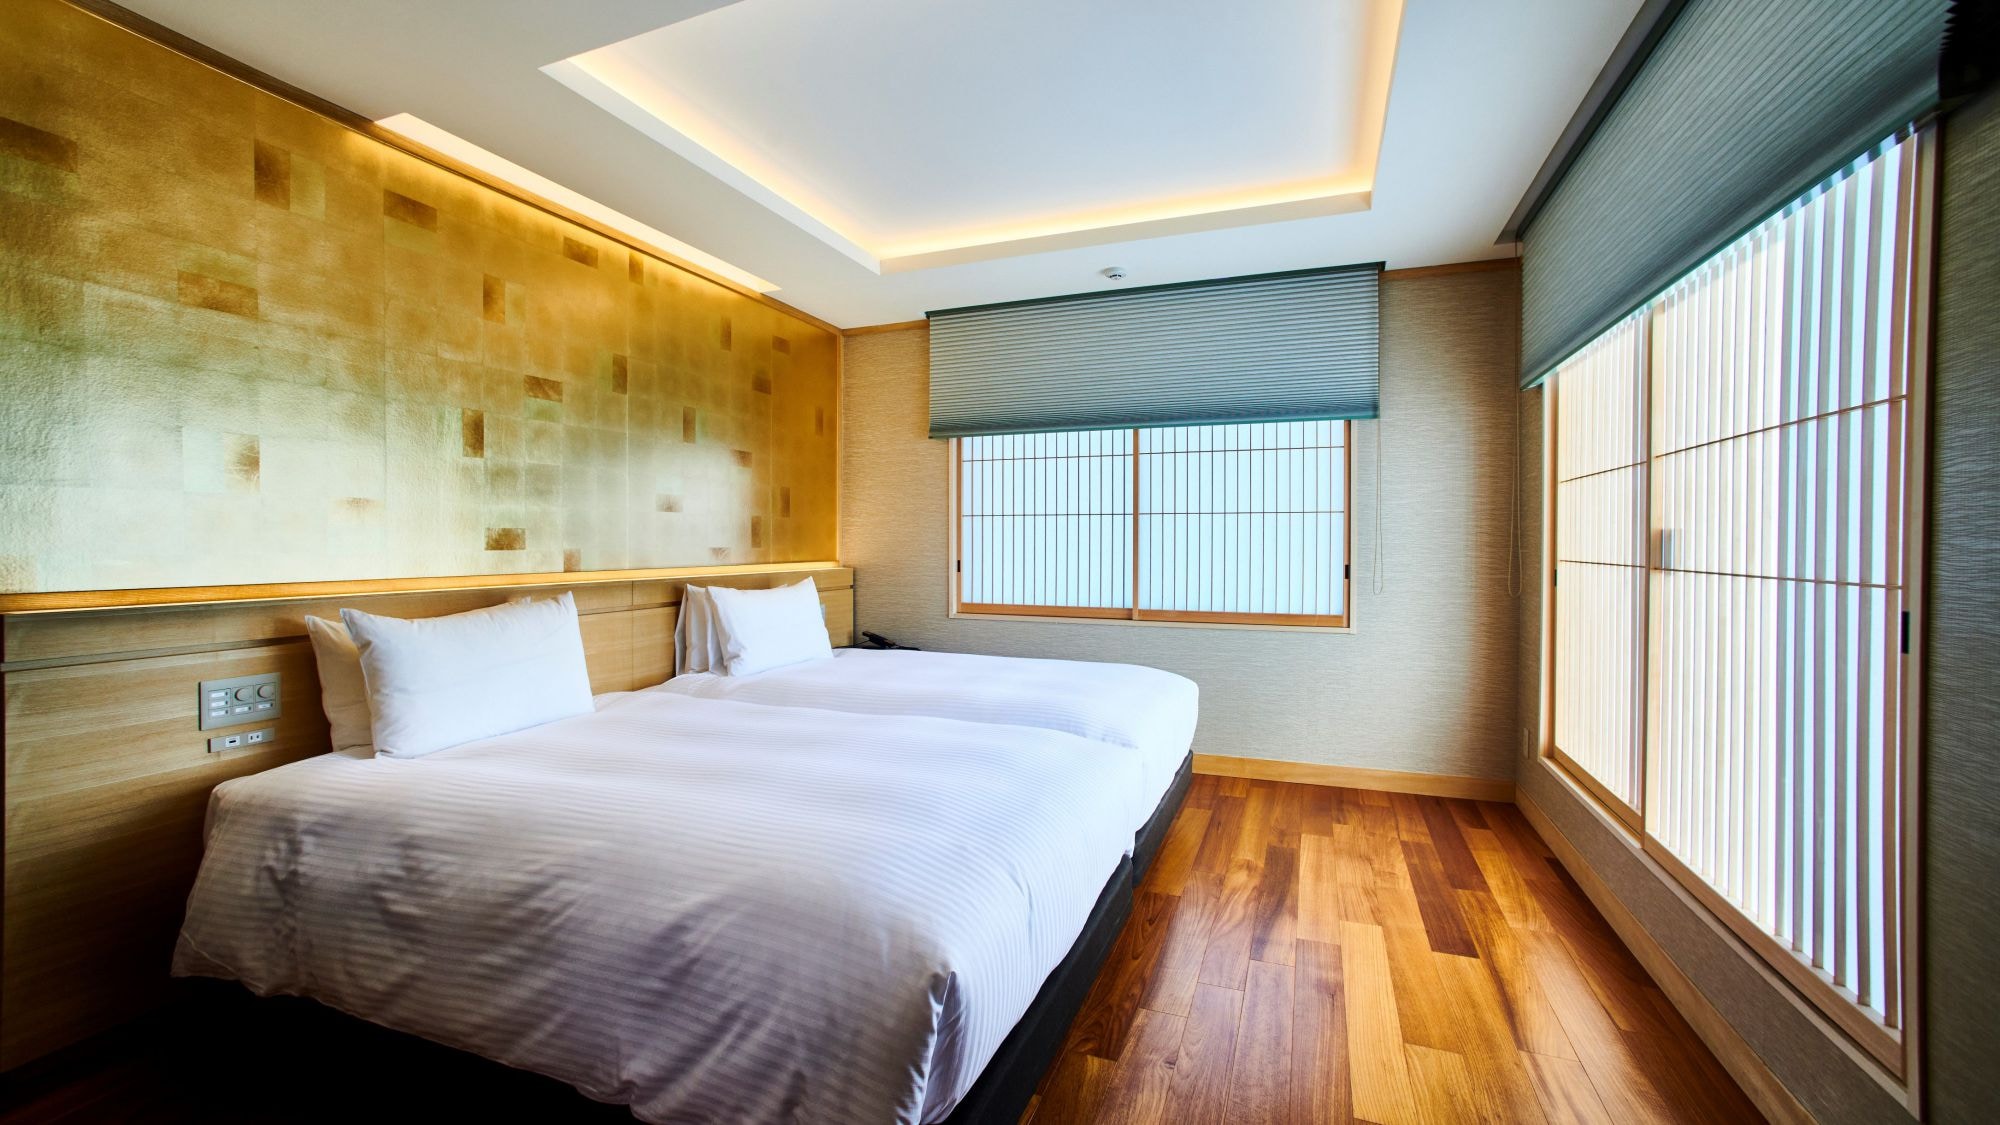 ■ "Enoshima Hotel" suite room "suite room with open-air bath"